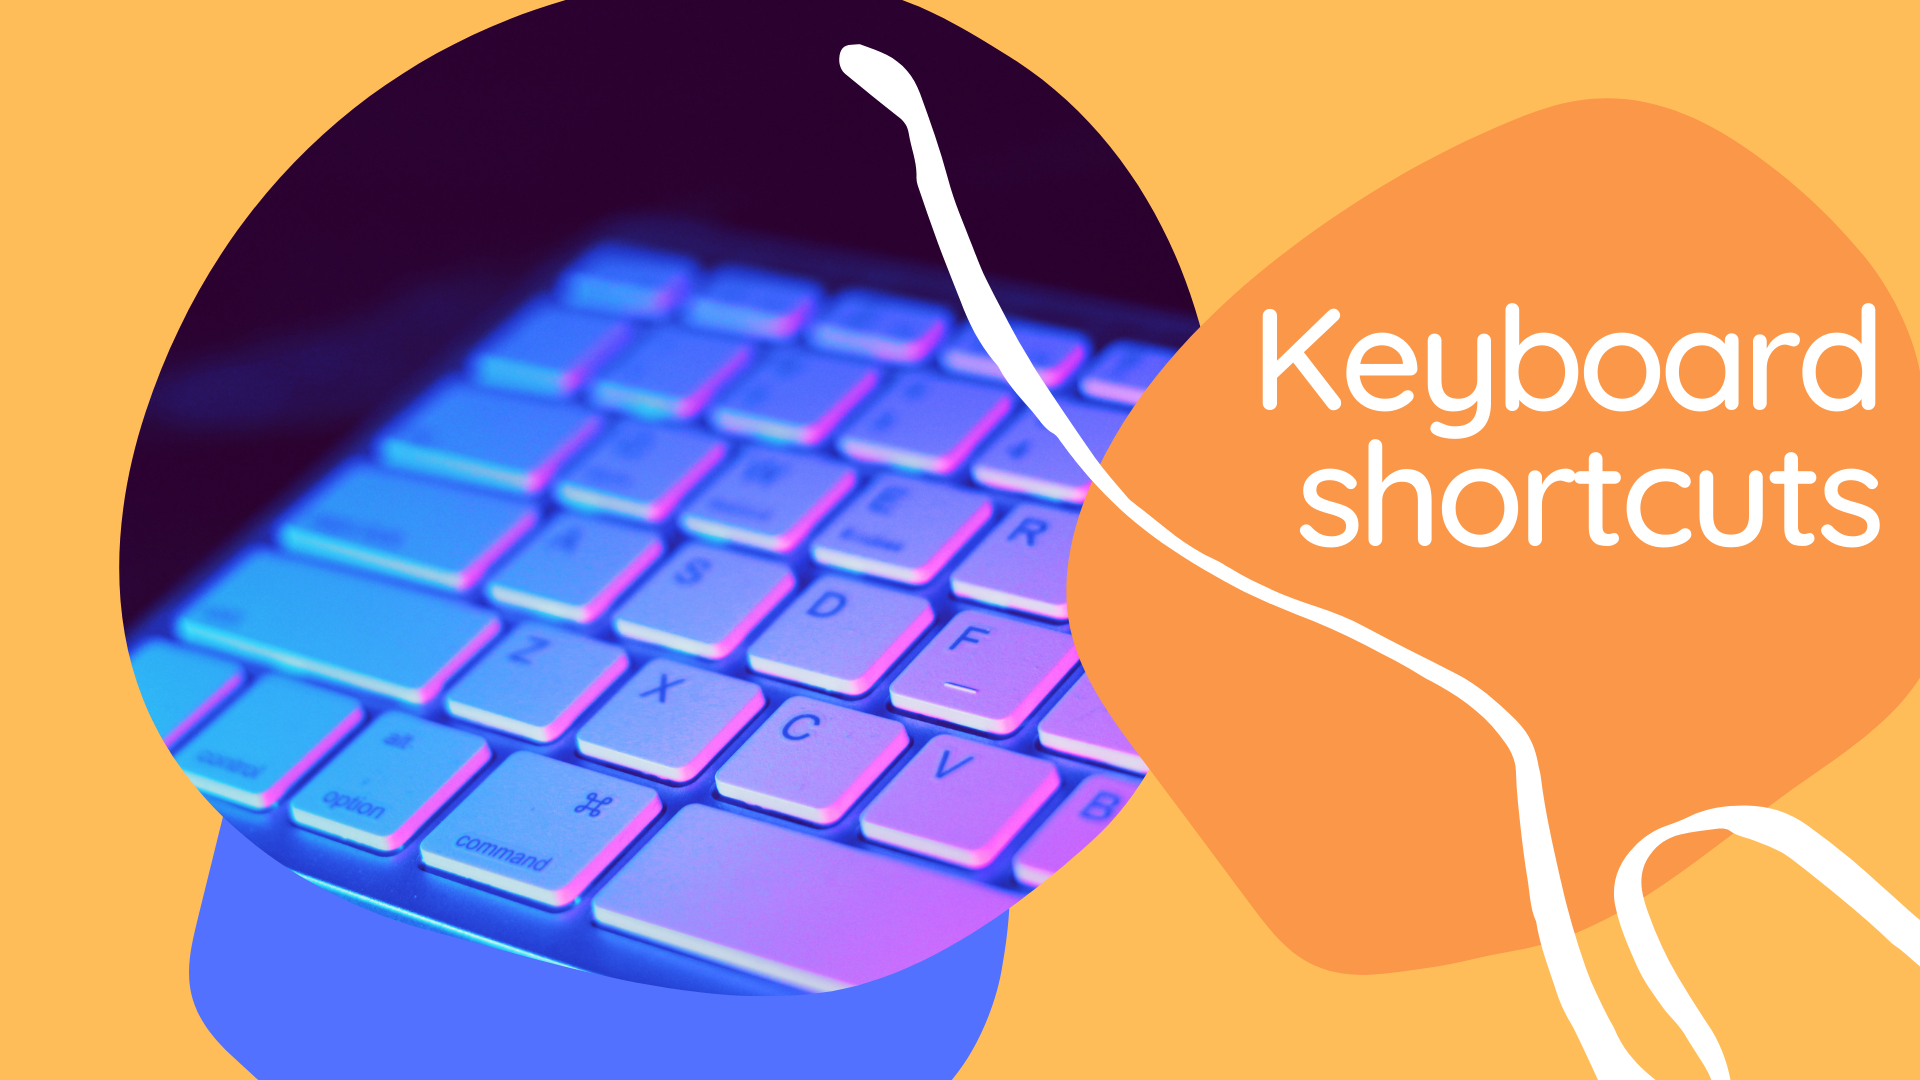 All Keyboard shortcuts of Windows 2020